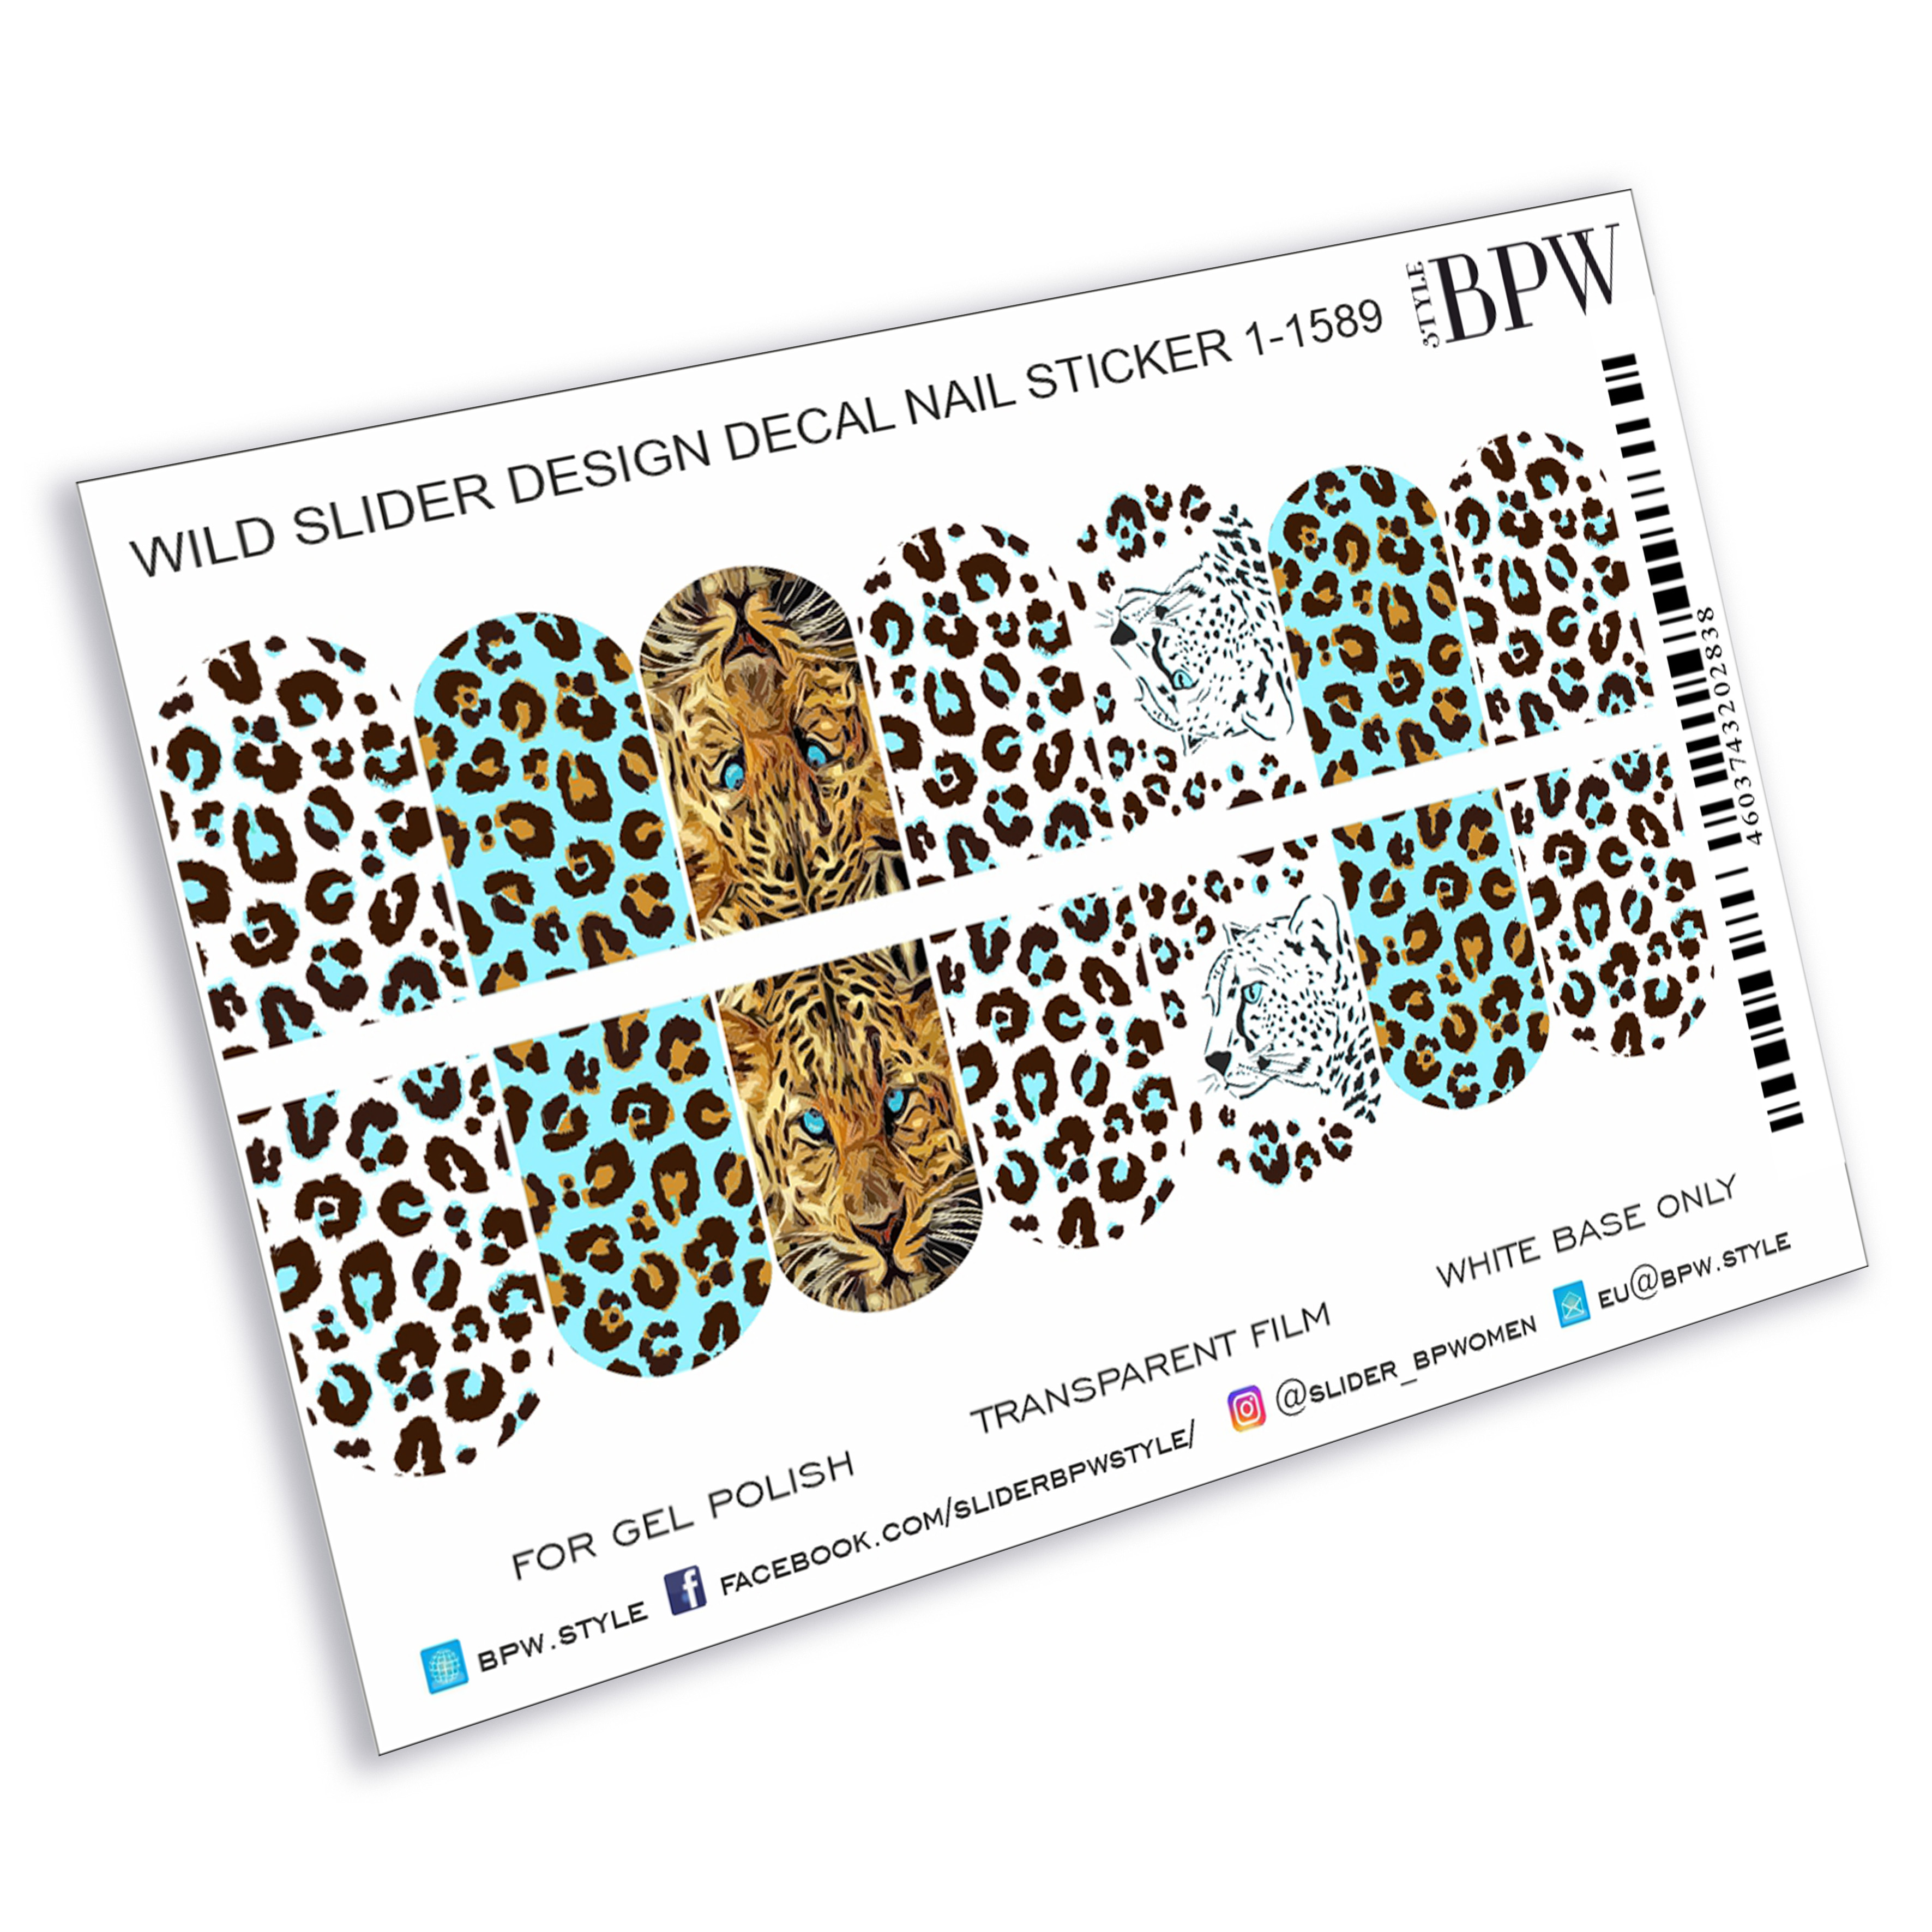 Decal nail sticker Leopard mix